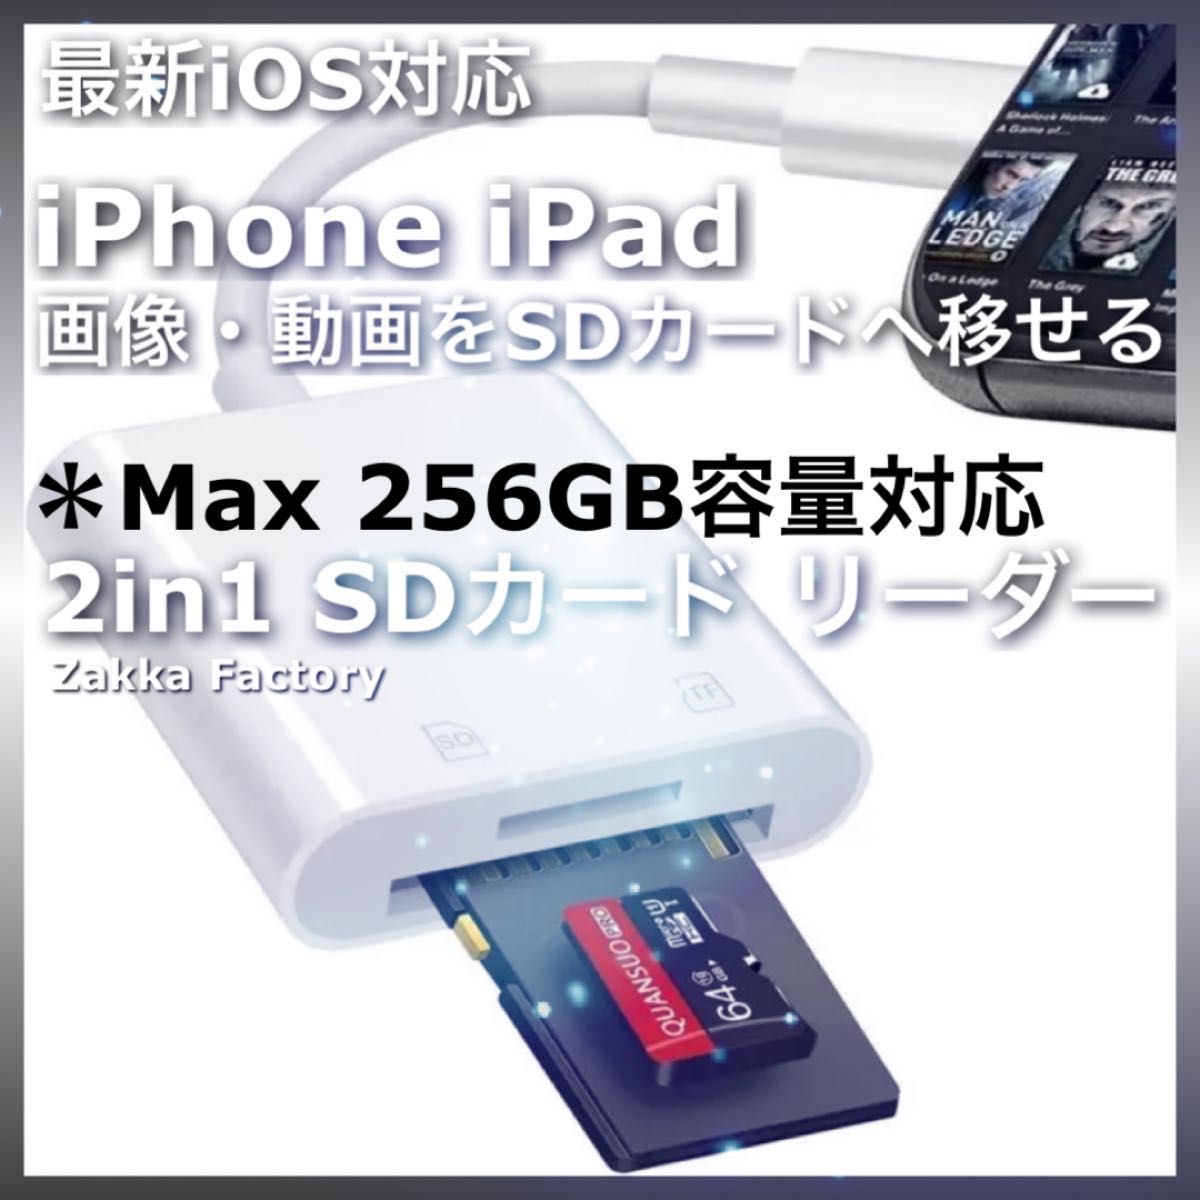 2in1 iphone ipad アイフォン アイホン アイパッド SDカードリーダー 映像 写真 動画 データ保存 転送